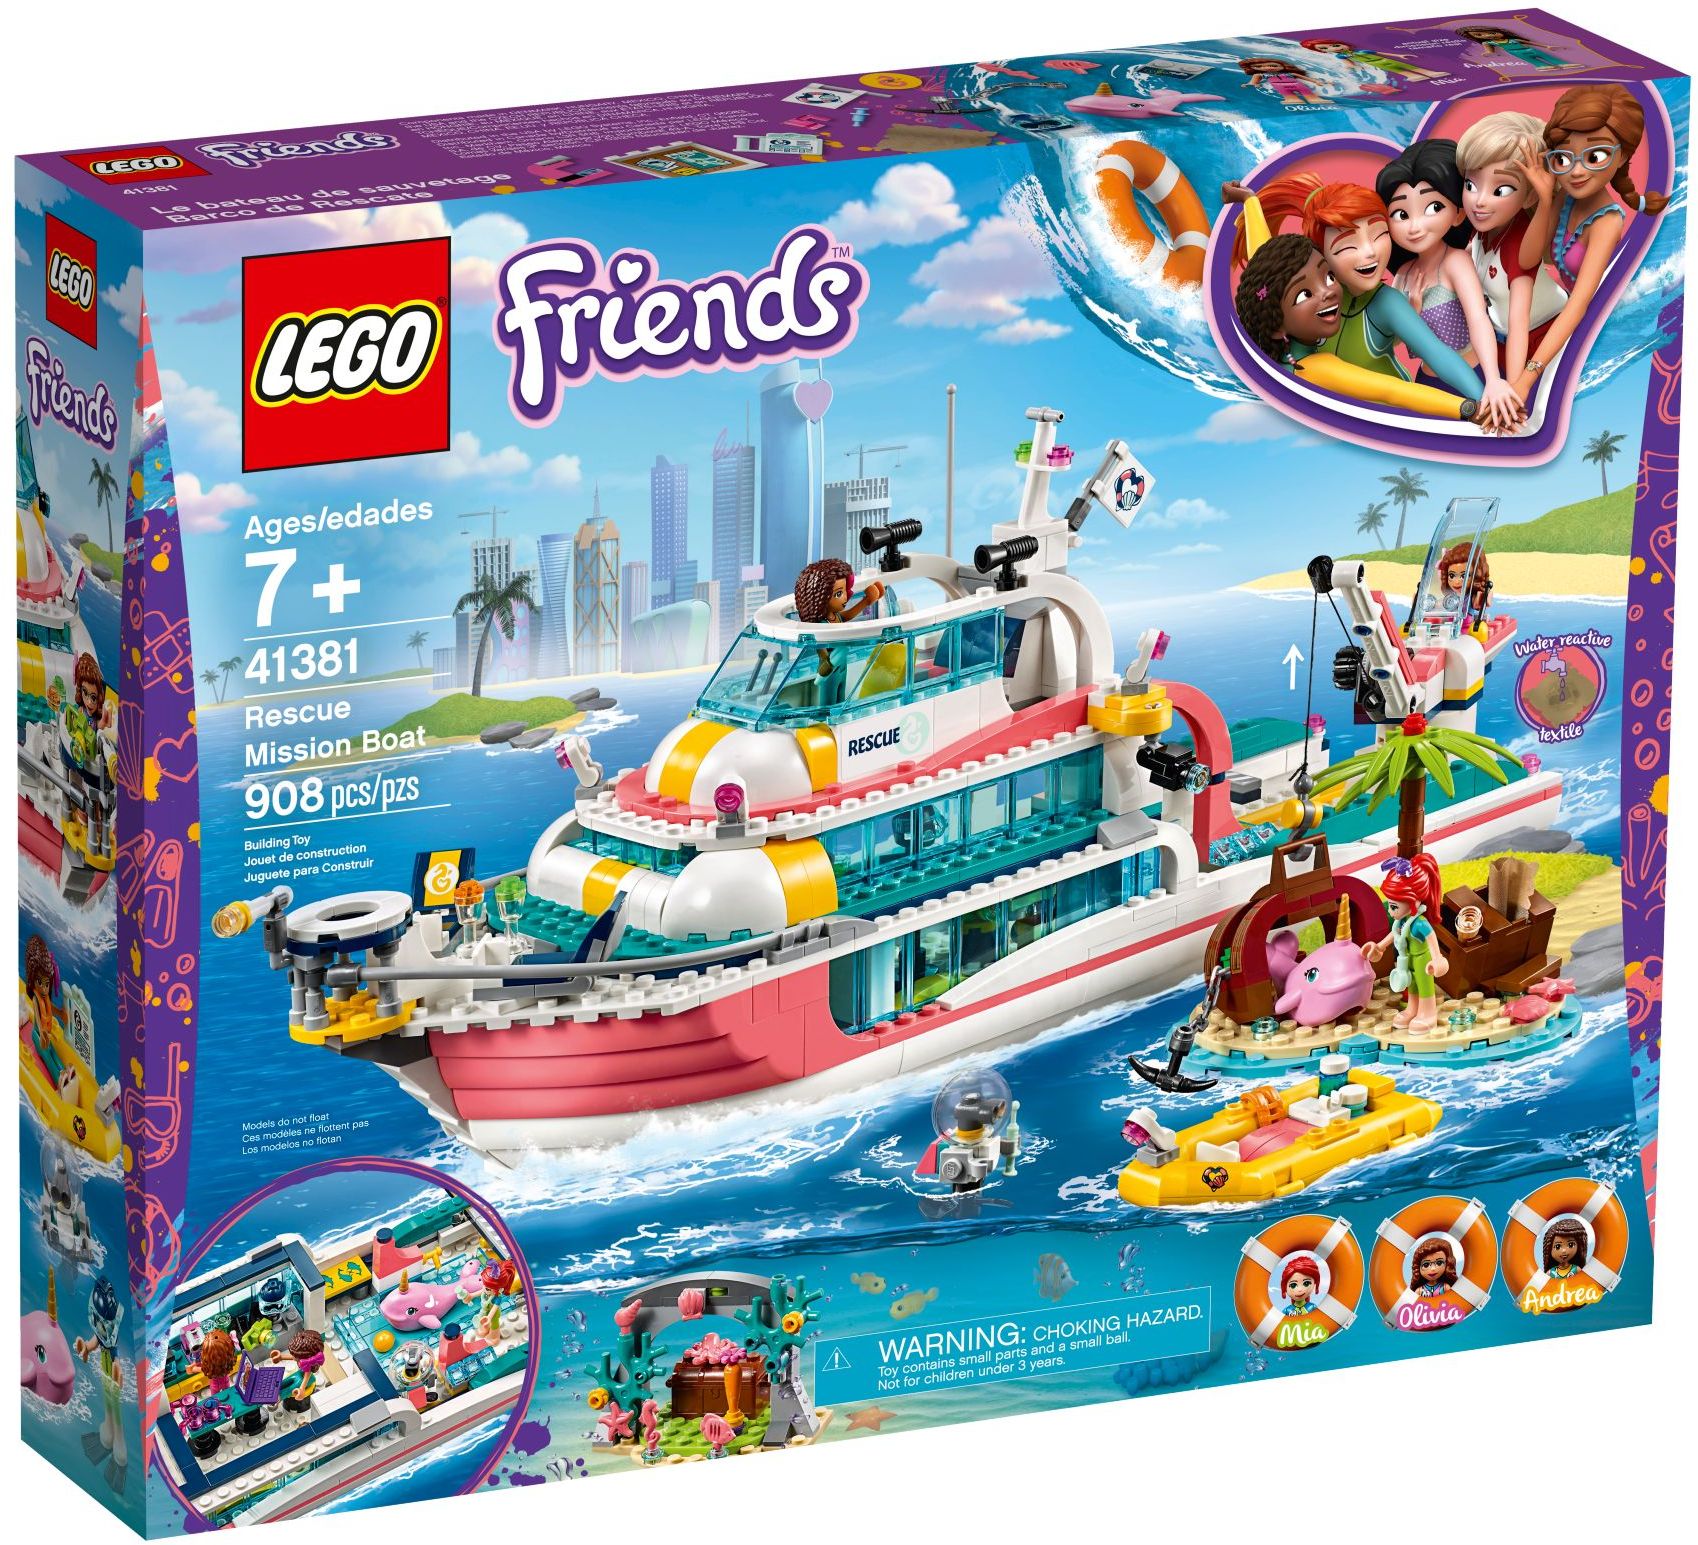 Rescue Mission Boat (41381) | LEGO Friends Wiki | Fandom